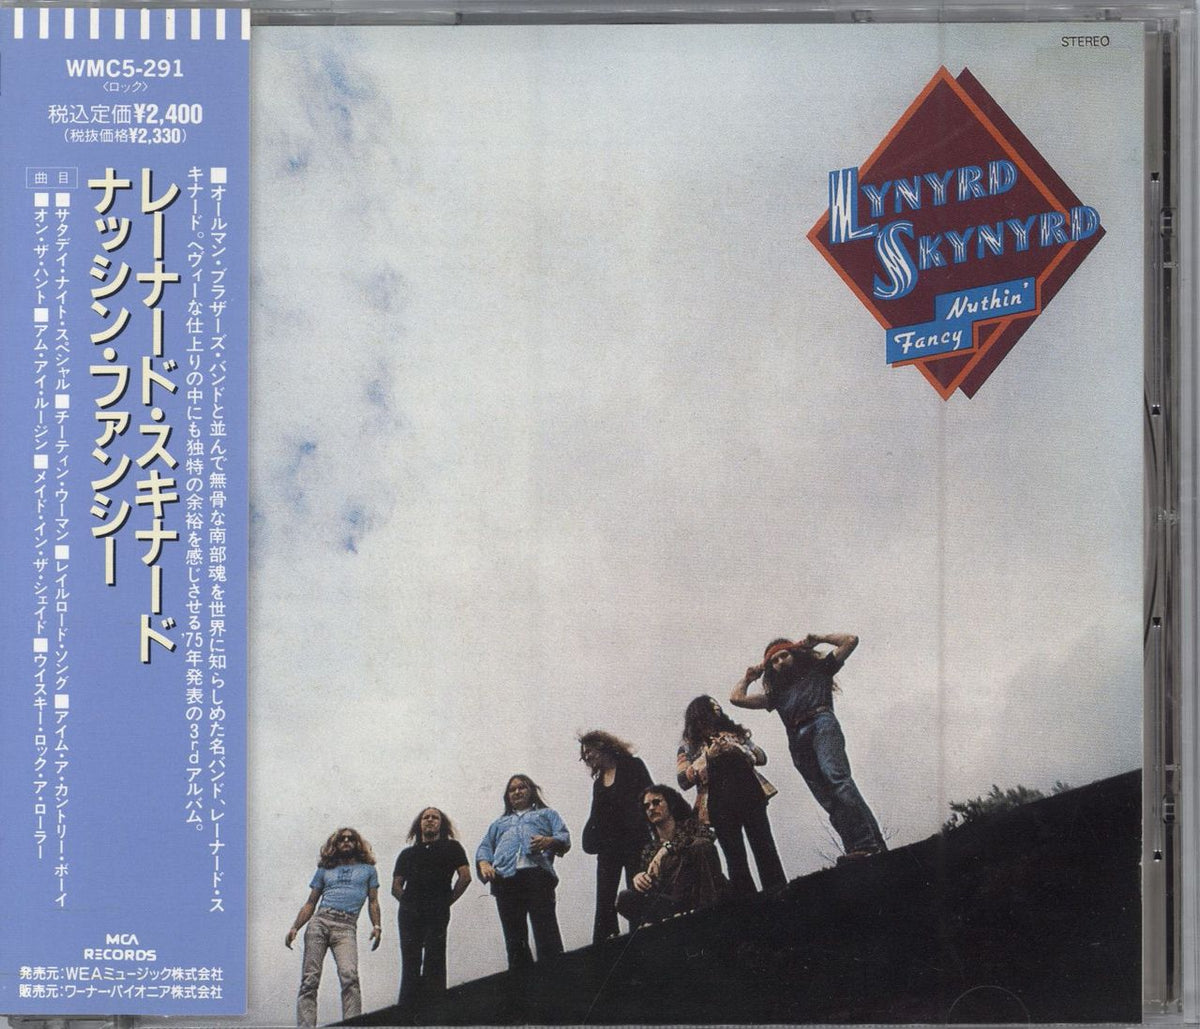 Lynyrd Skynyrd Nuthin' Fancy Japanese Promo CD album — RareVinyl.com